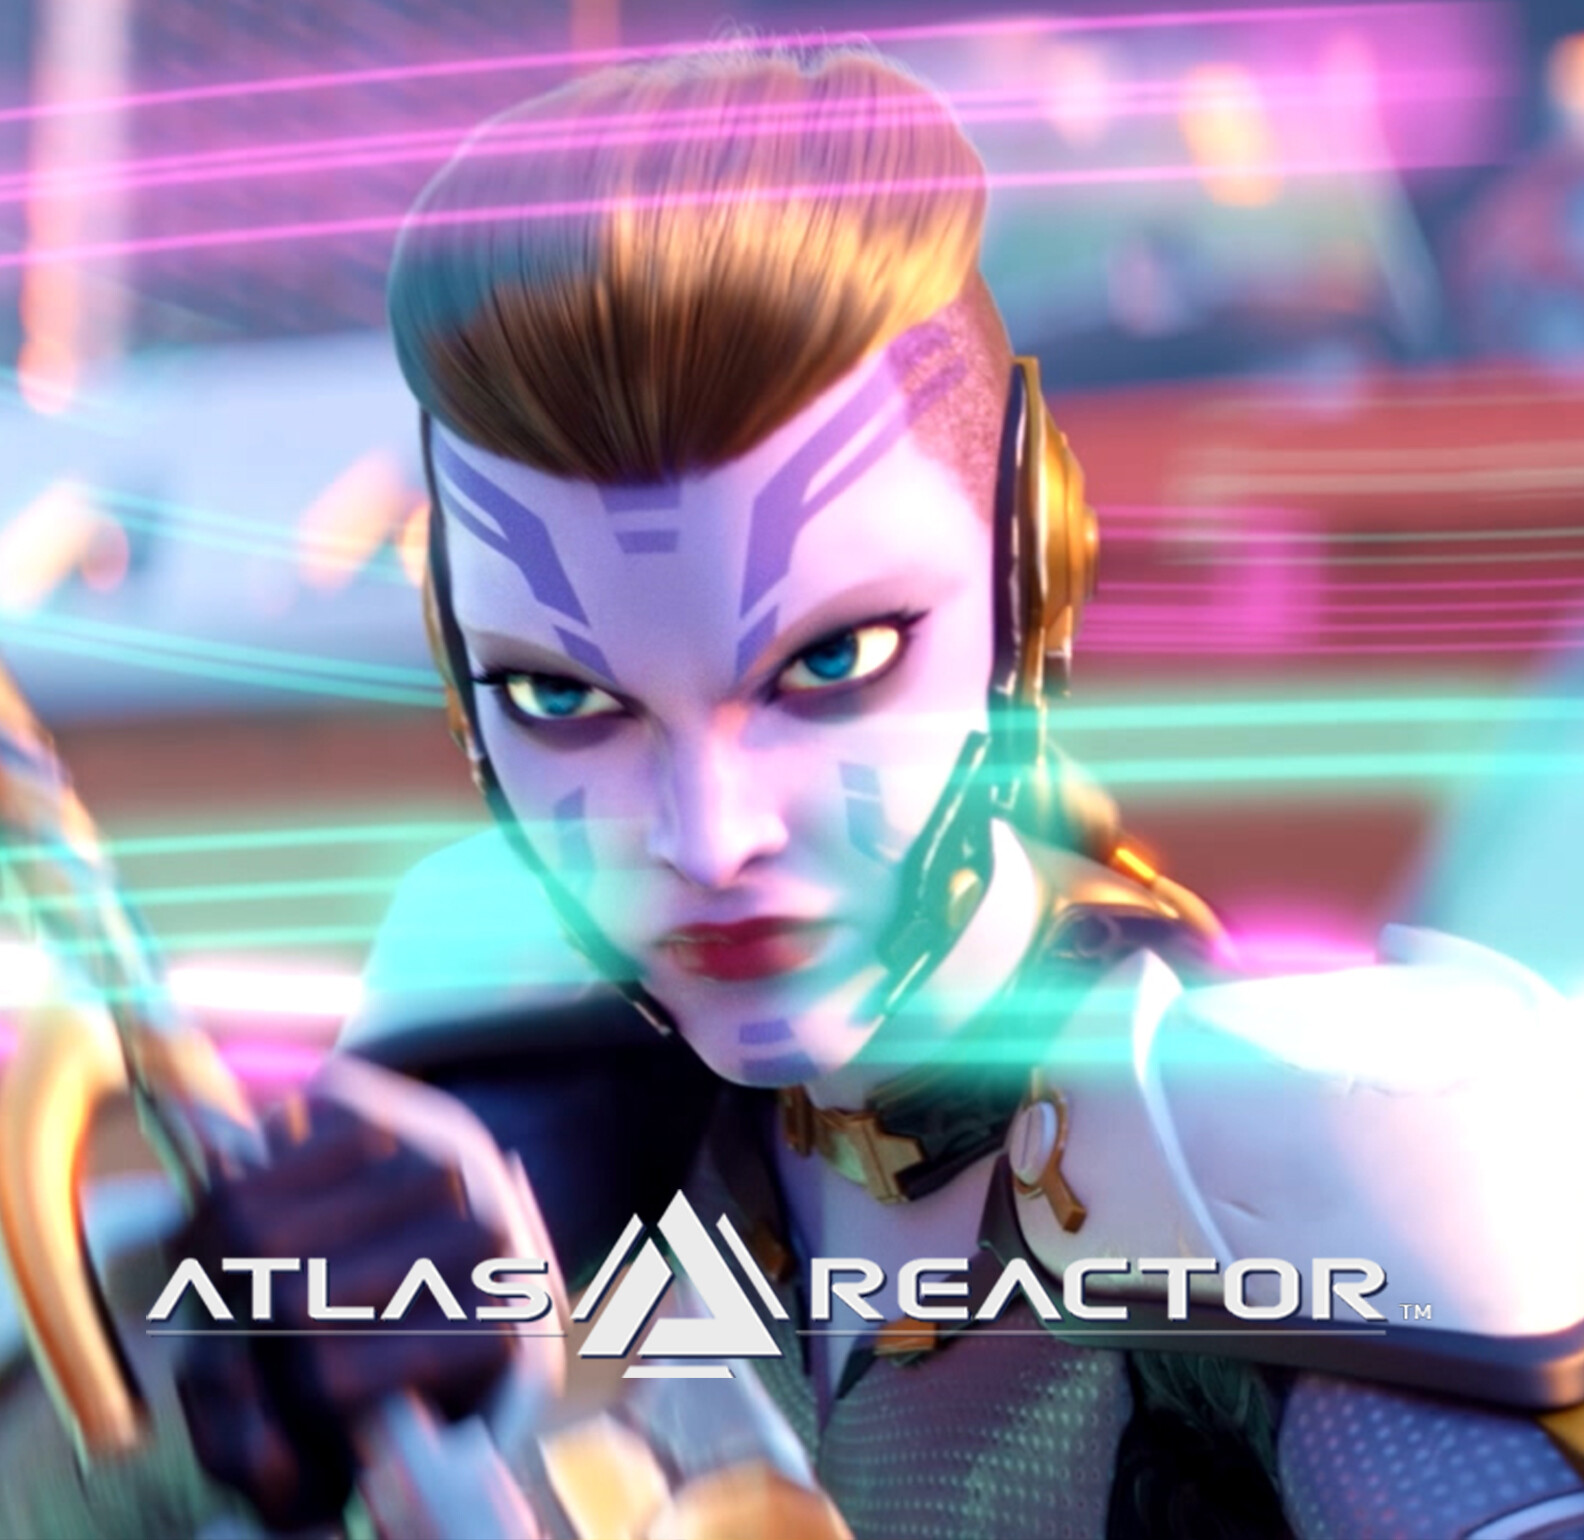 ATLAS REACTOR "Battlemonk"